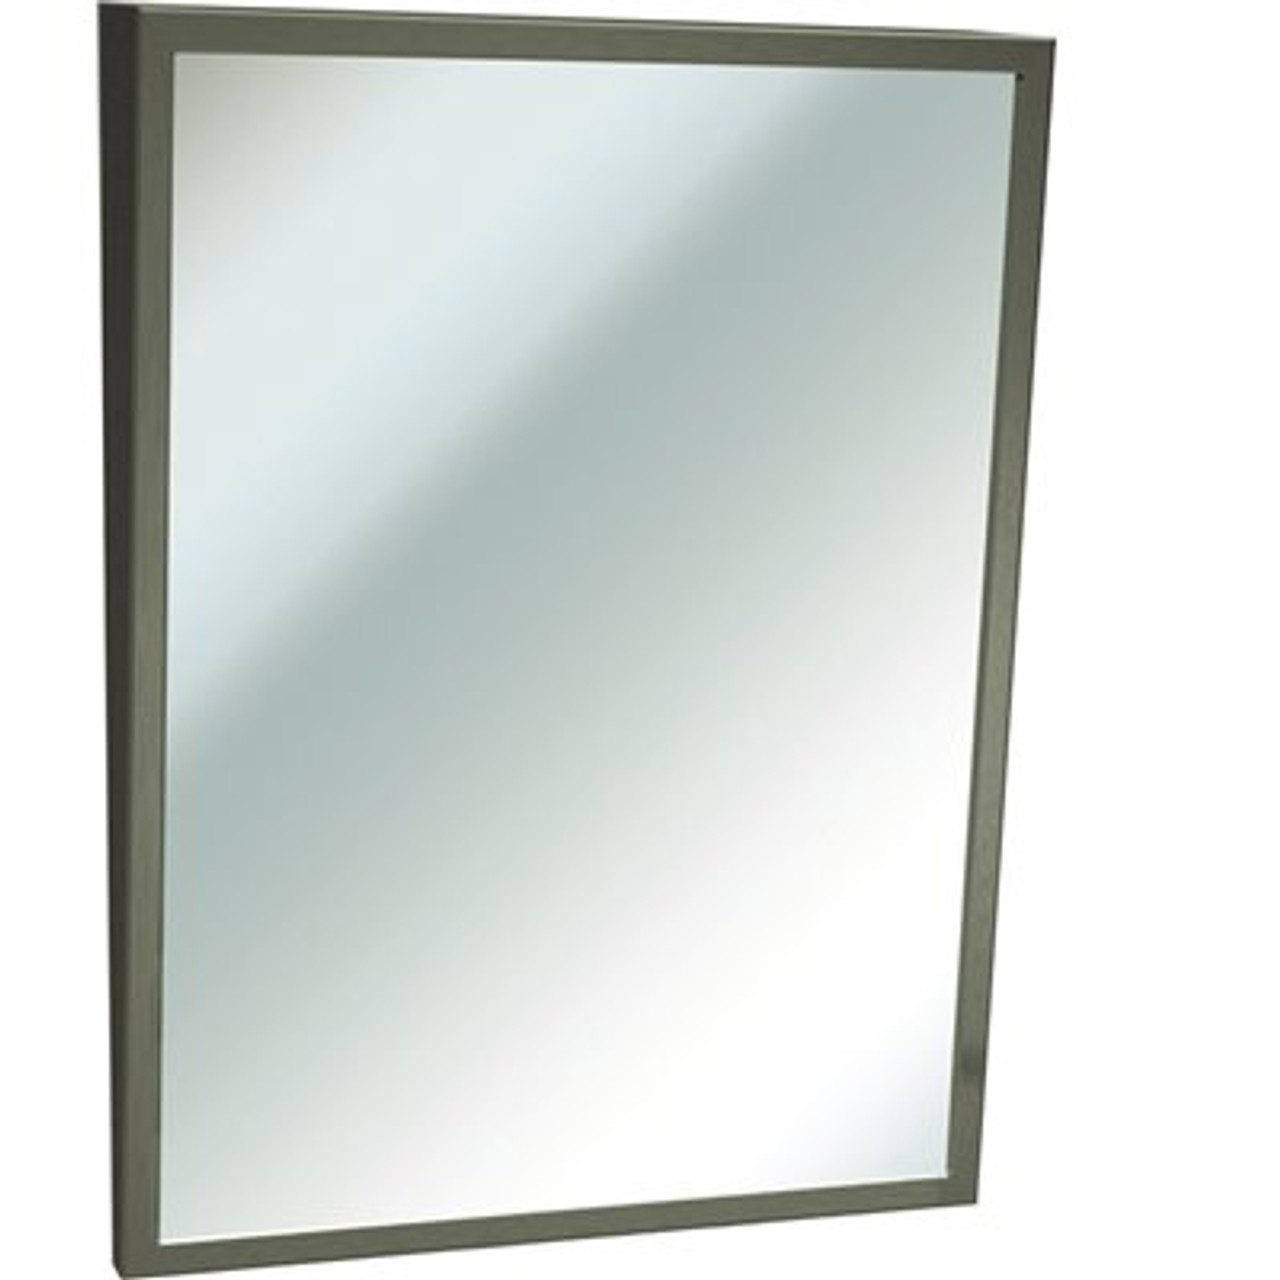 ASI 24 in. W x 36 in. H Rectangular Framed Fixed Tilt Wall Mount Bathroom Vanity Mirror in Stainless Steel